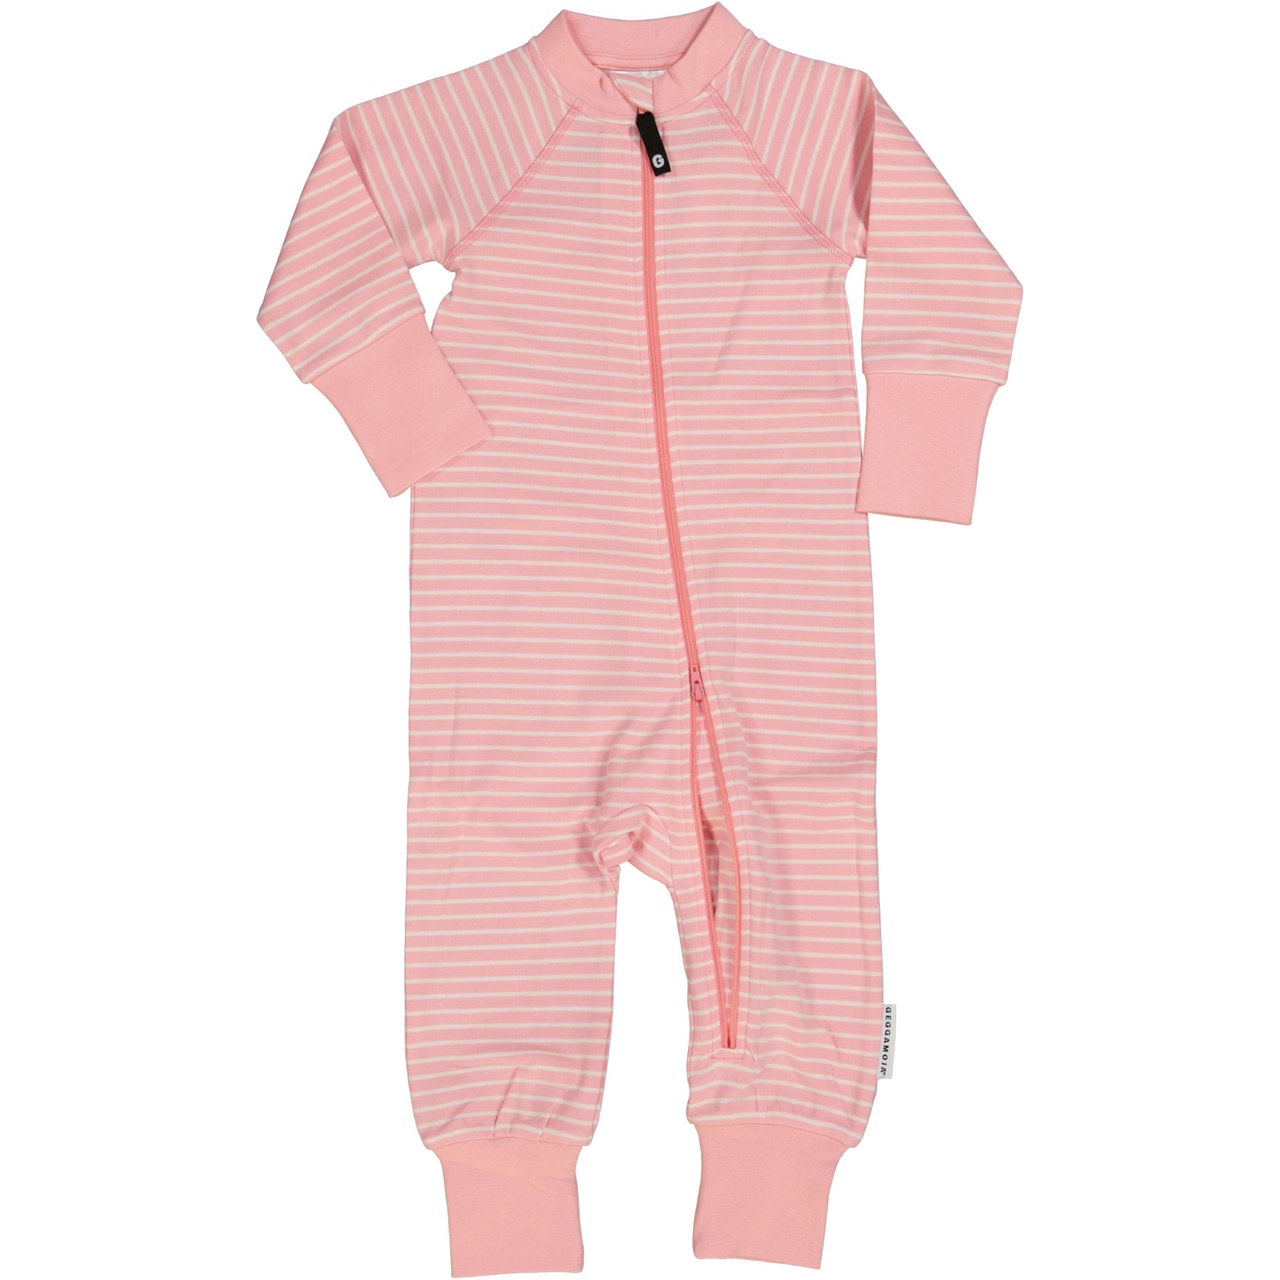 Two way zip -Pyjamas Classic Pink/white